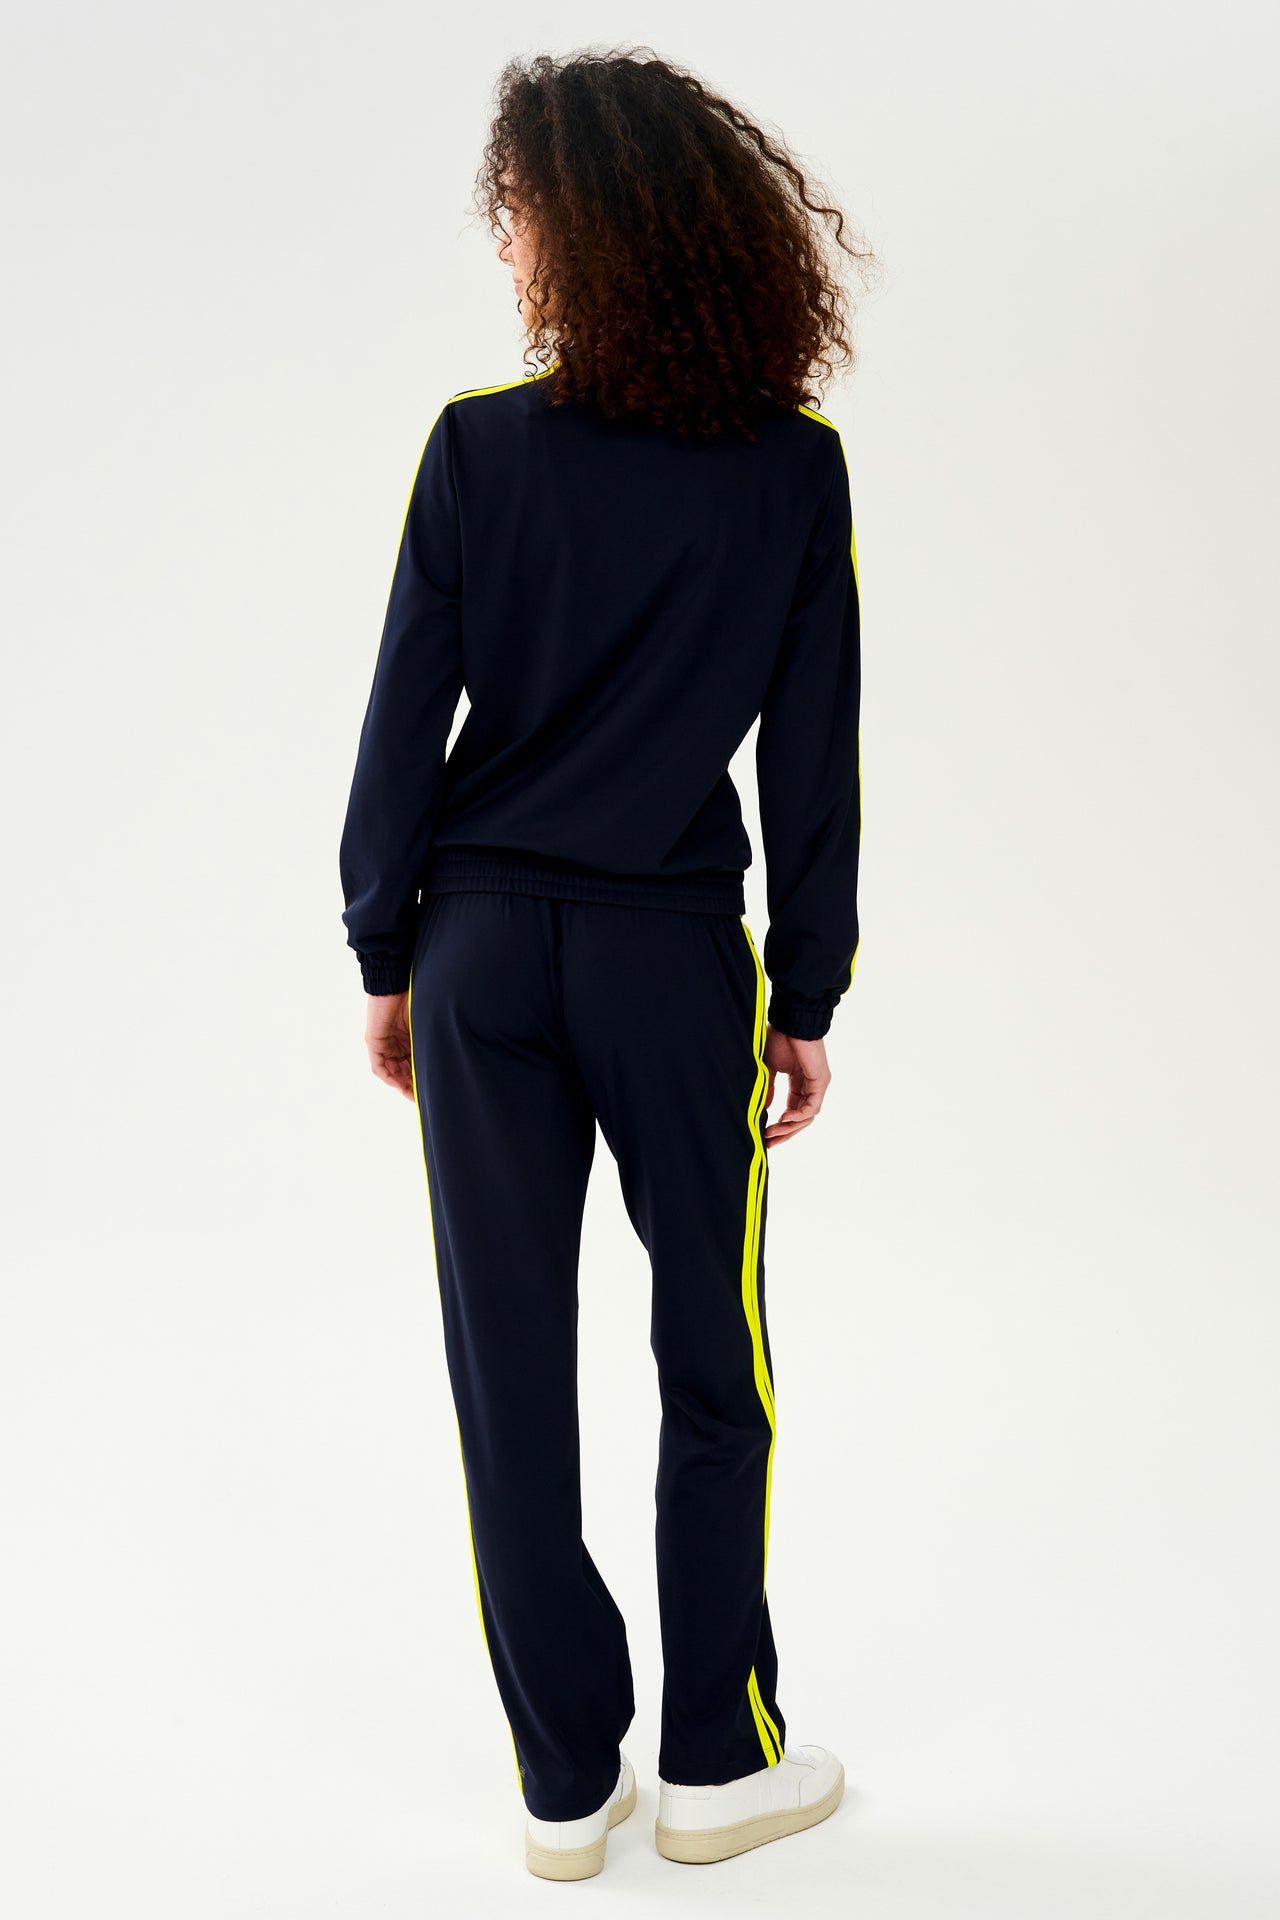 The back view of a woman wearing a SPLITS59 Fox Techflex Jacket in Indigo/Chartreuse.